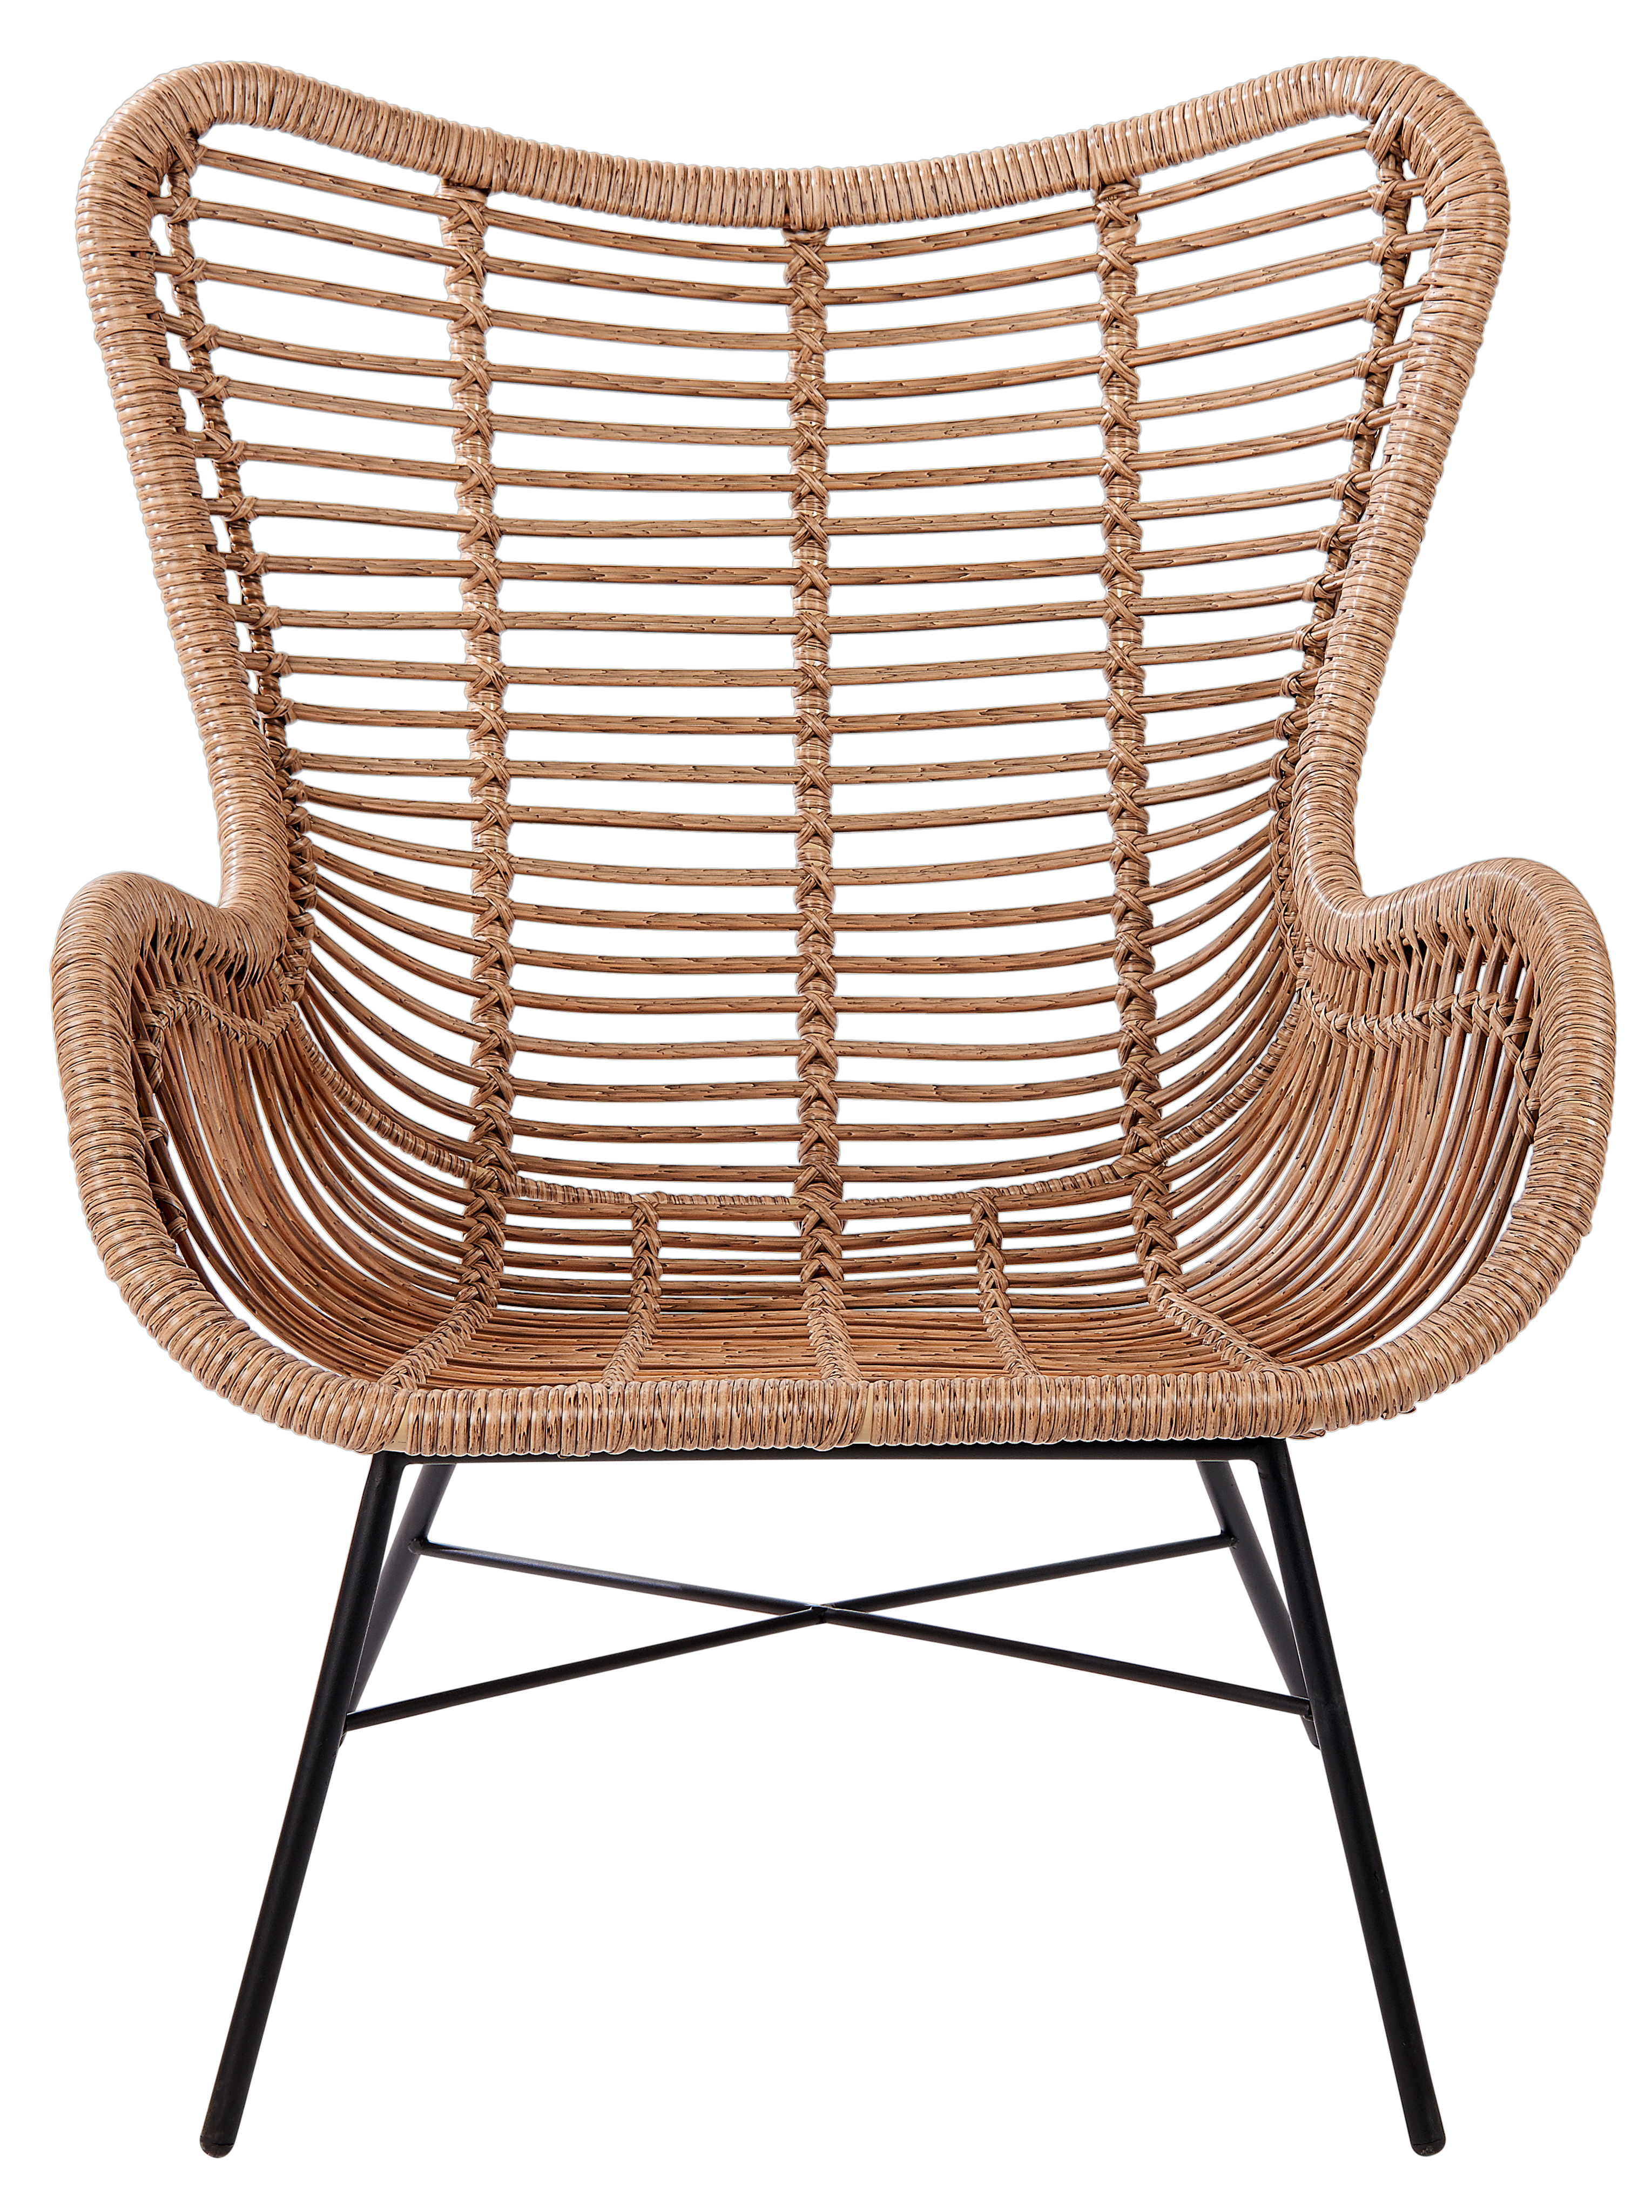 Ondeugd Bedoel IJver TOBAGO Lounge stoel zwart, naturel H 91 x B 79 x D 71,5 cm | CASA